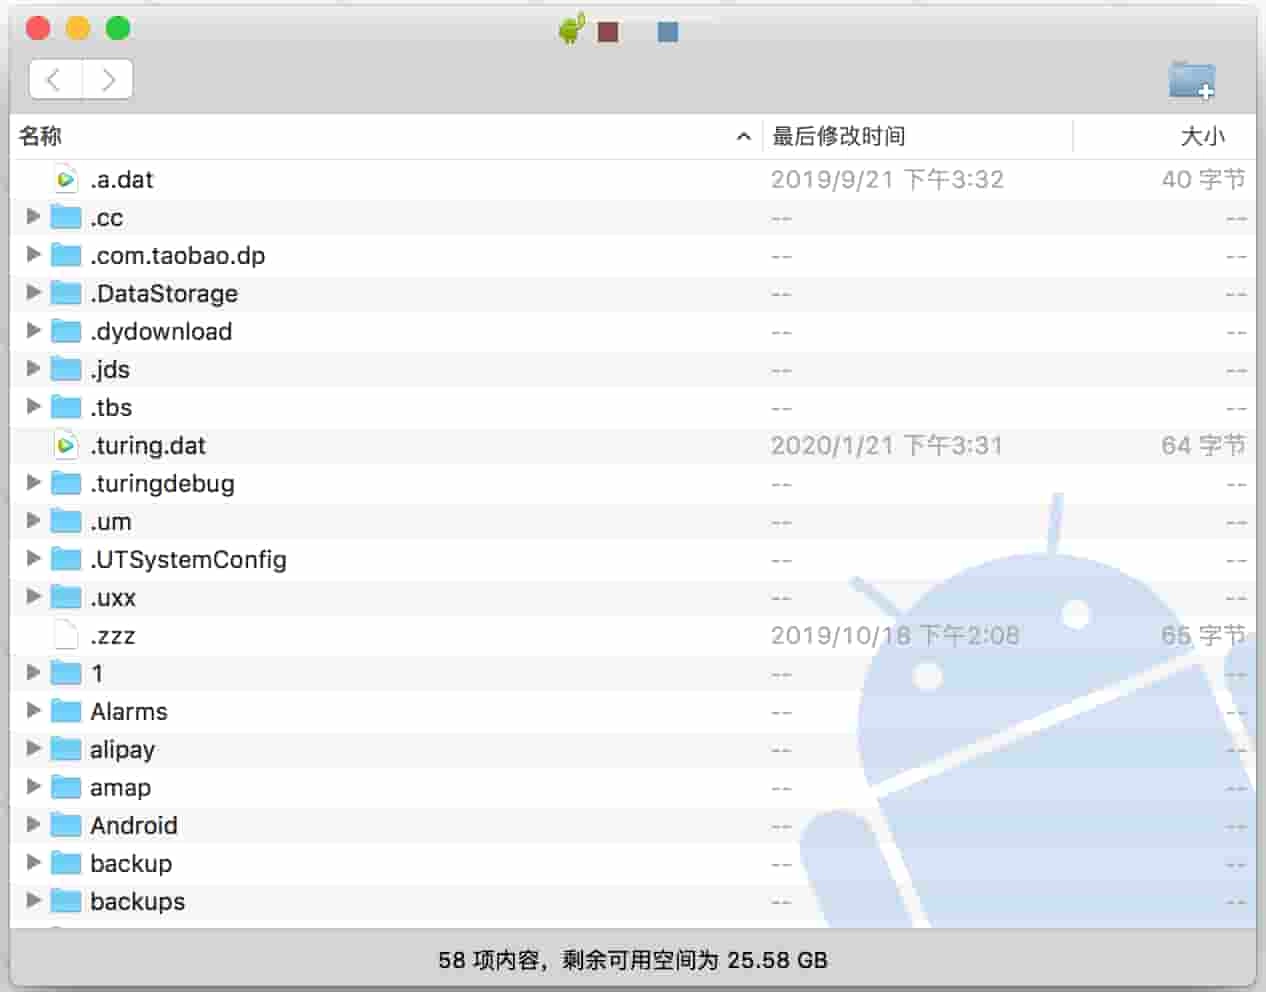 Mac 上连接 Android 传输文件与配置 SDK platform tools 环境的配图